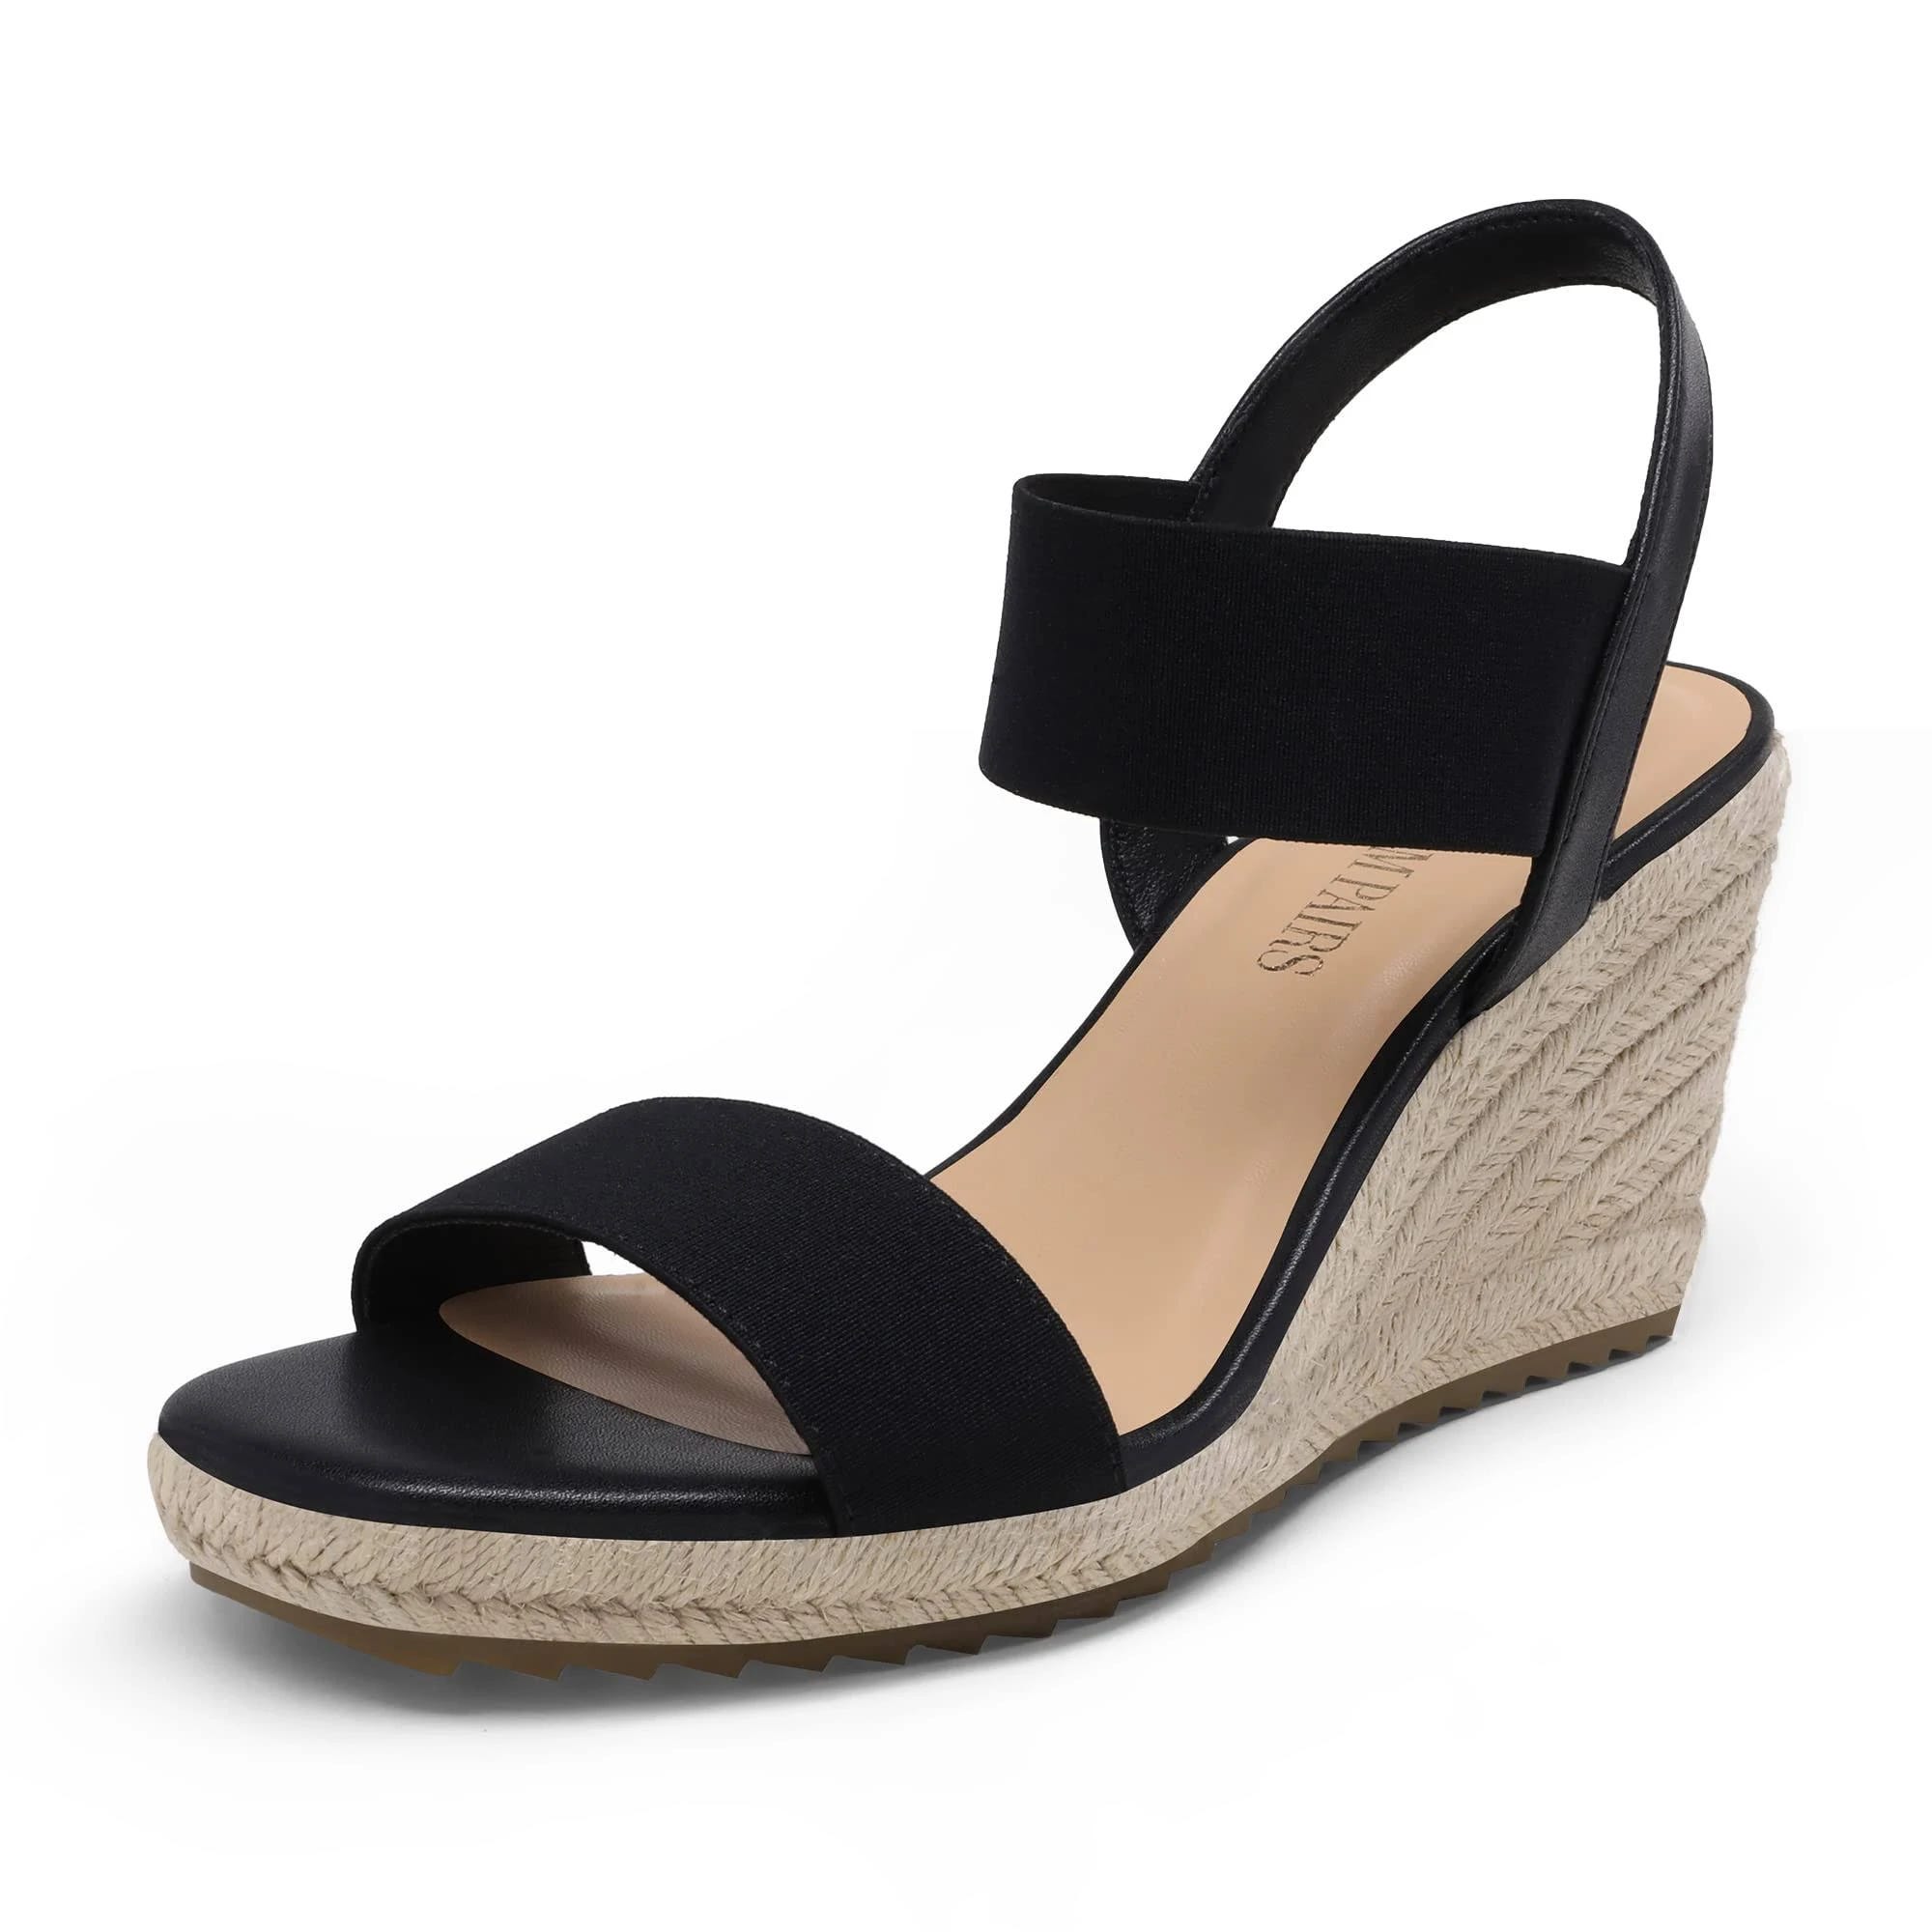 Dream Pairs Women's Espadrille Platform Wedge Sandals with Adjustable Strap - Black Size 8.5 | Image